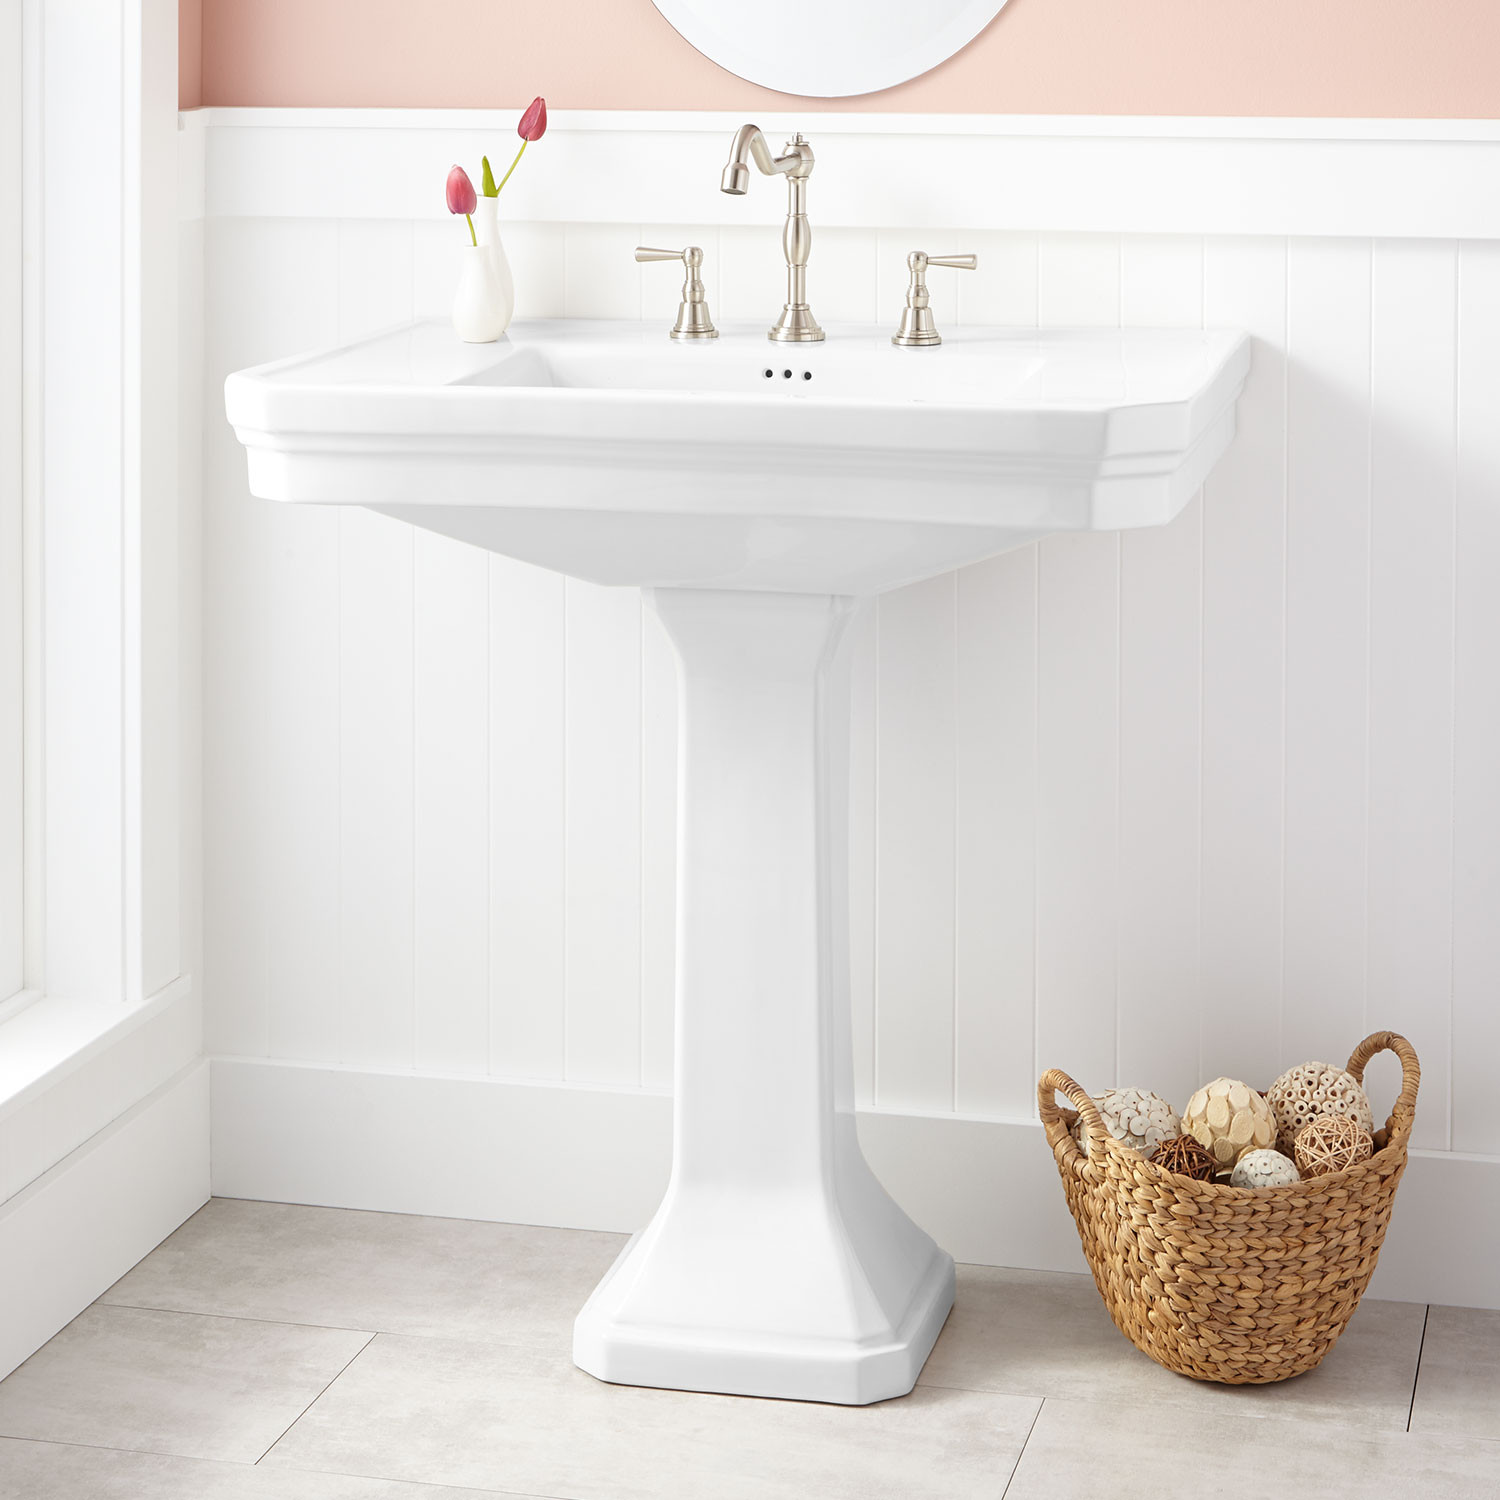 Best ideas about Pedestal Bathroom Sinks
. Save or Pin Signature Hardware Kacy Pedestal Sink Now.